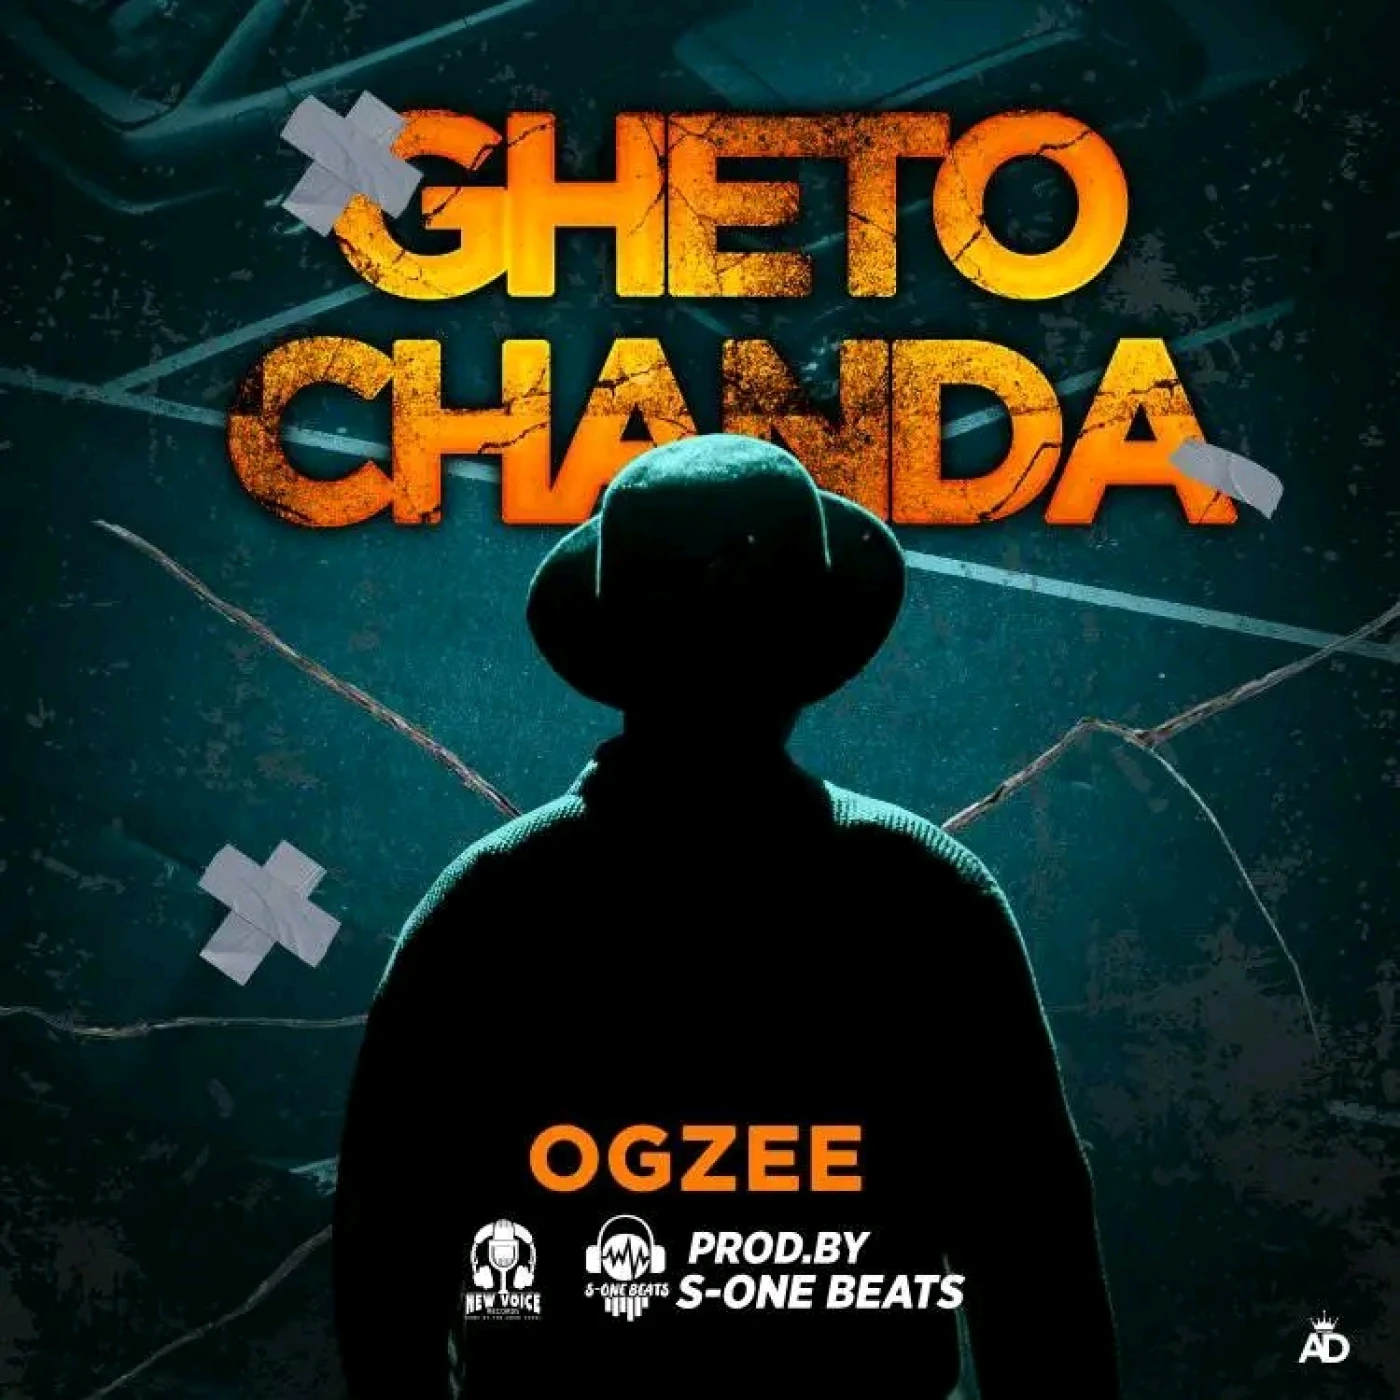 ogzee-ghetto-chanda-ogzee-Just Malawi Music